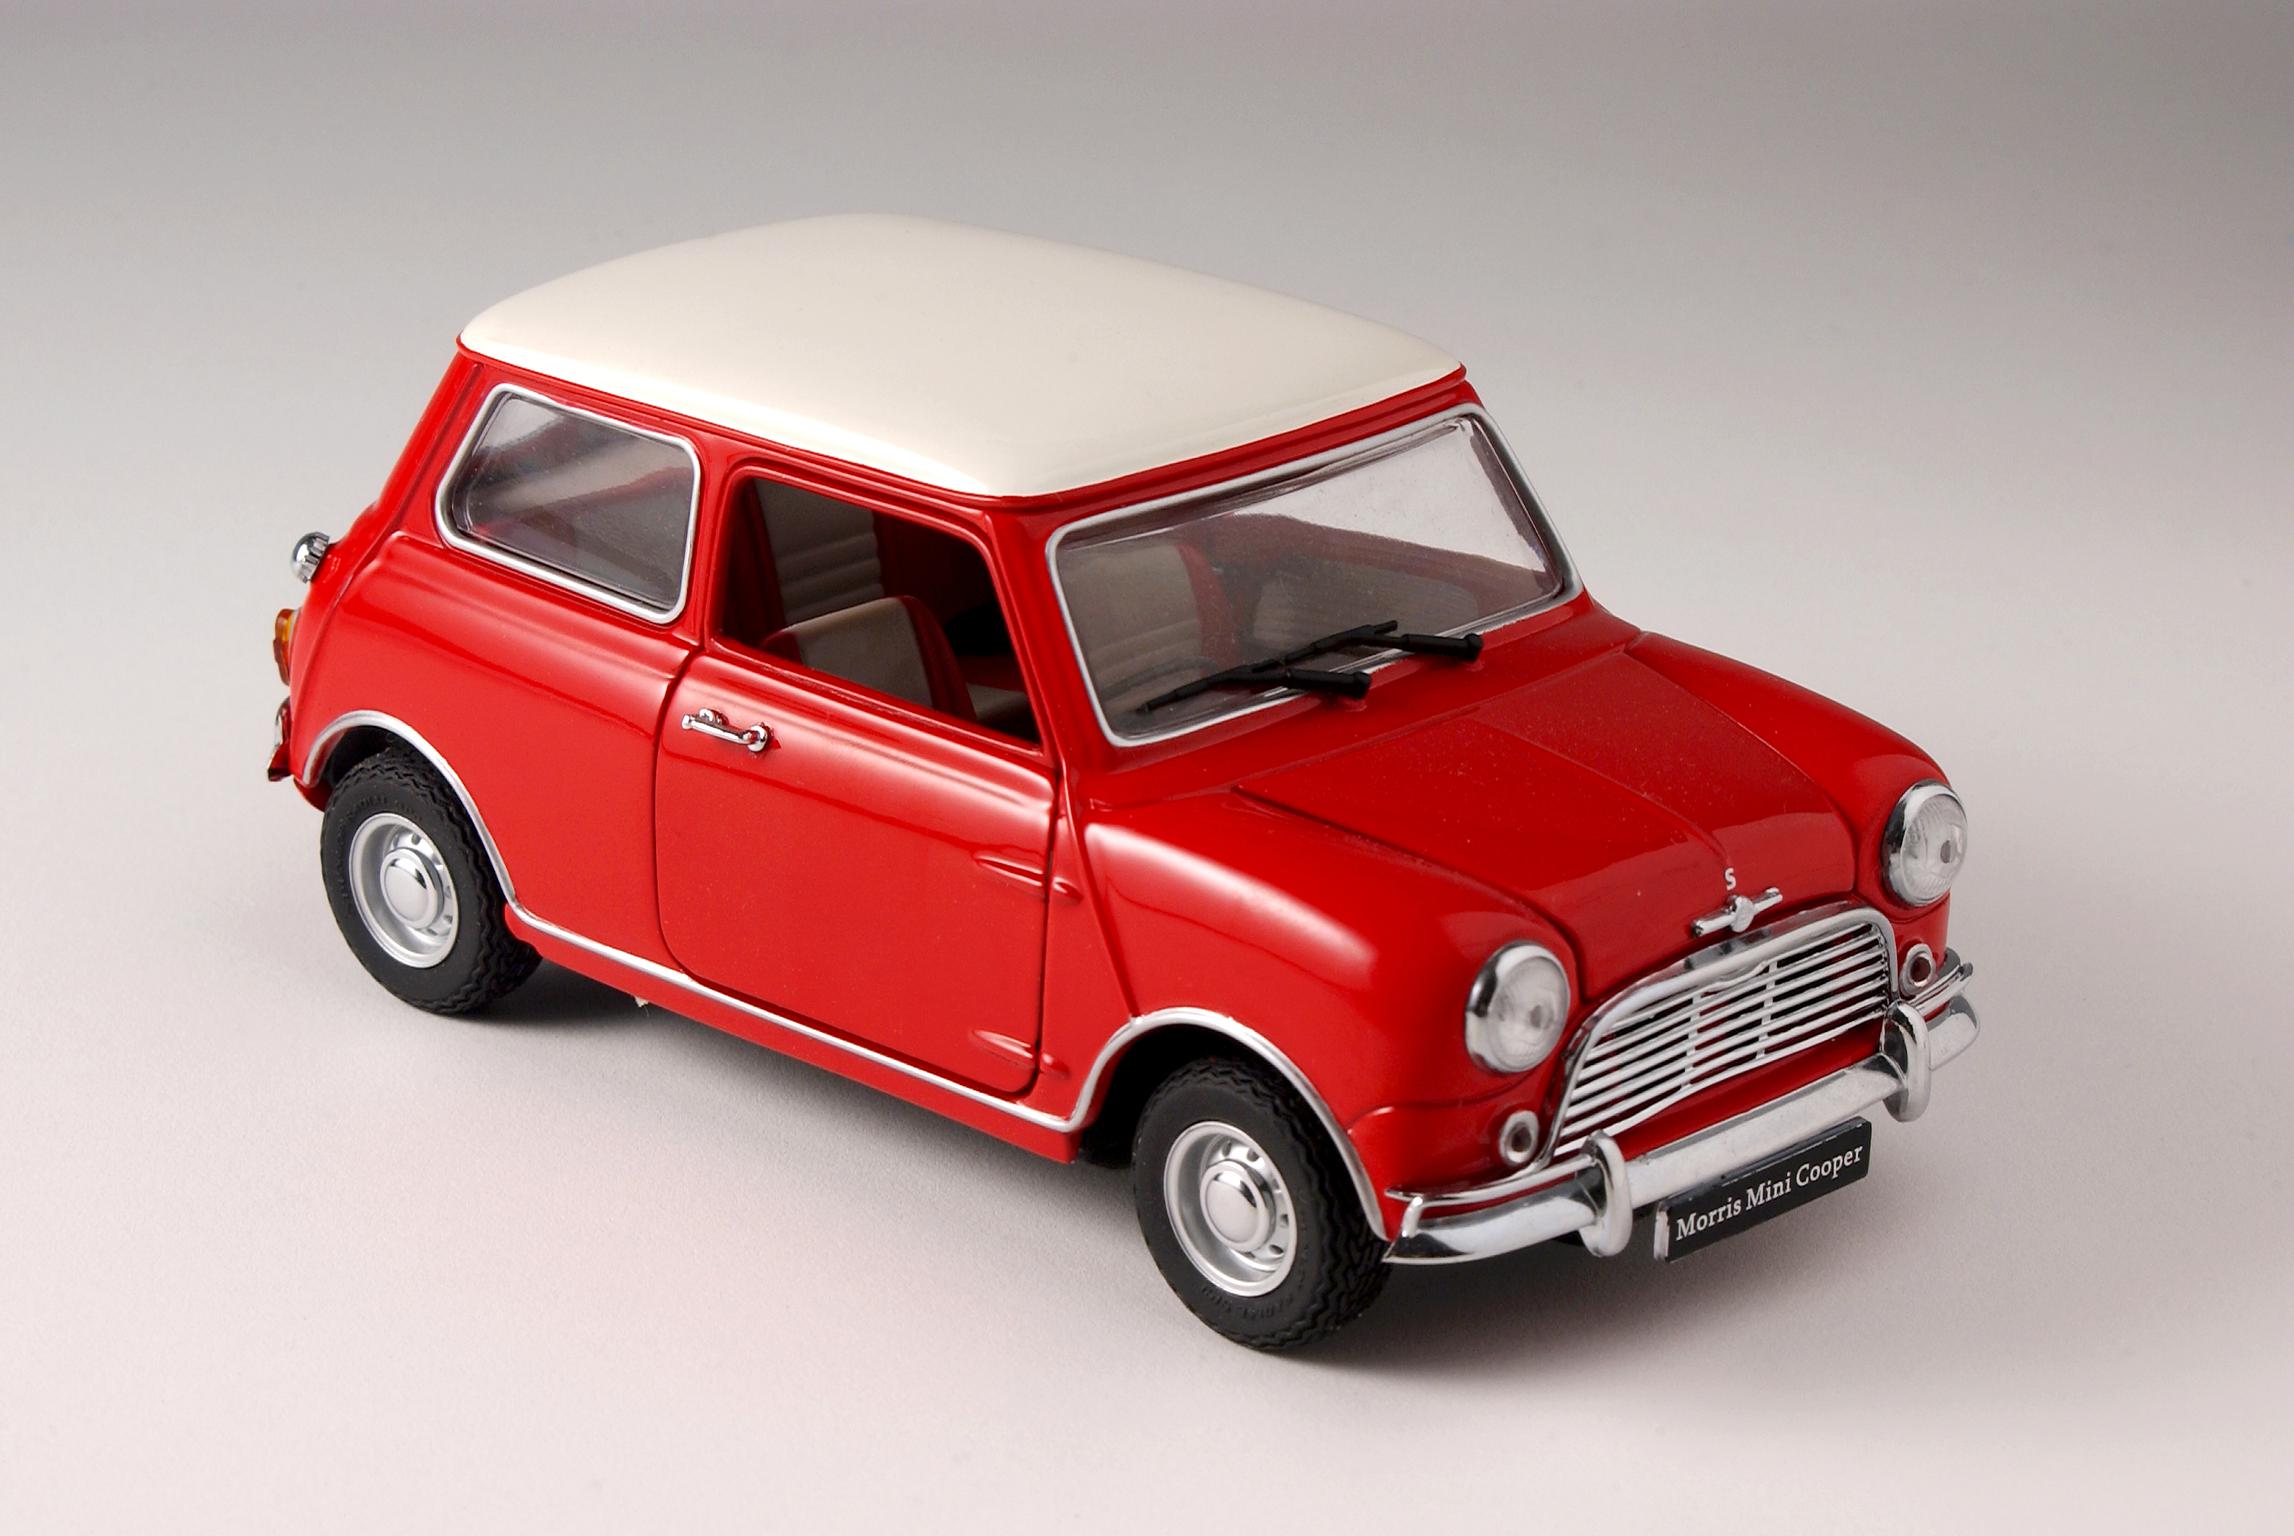 1964 Mini Cooper model